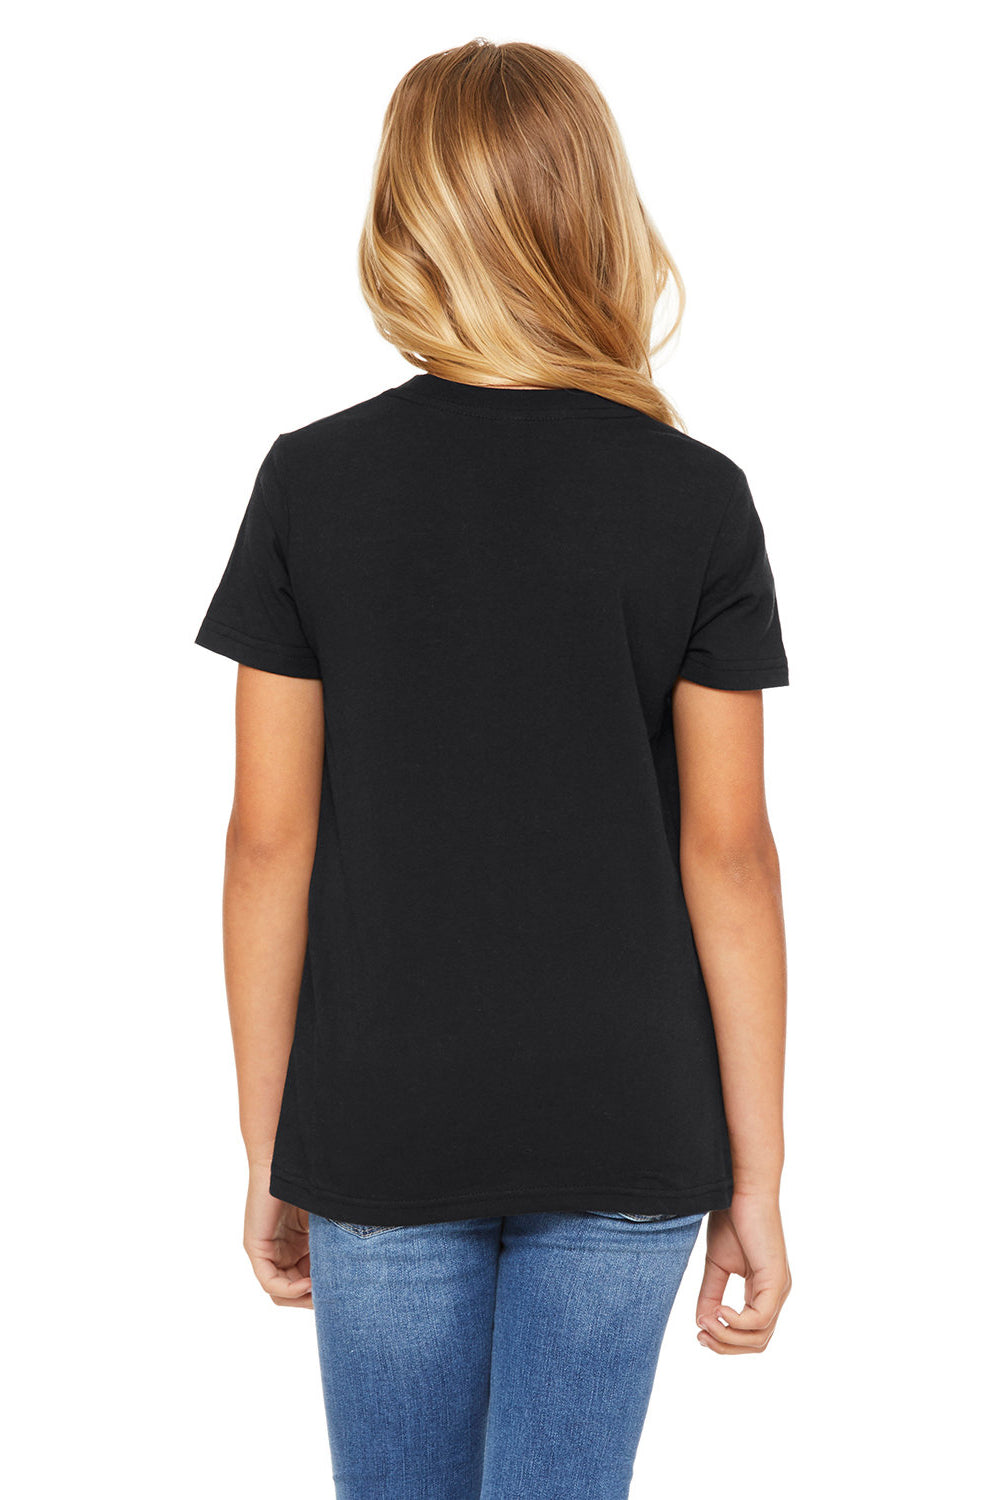 Bella + Canvas 3001Y Youth Jersey Short Sleeve Crewneck T-Shirt Vintage Black Model Back